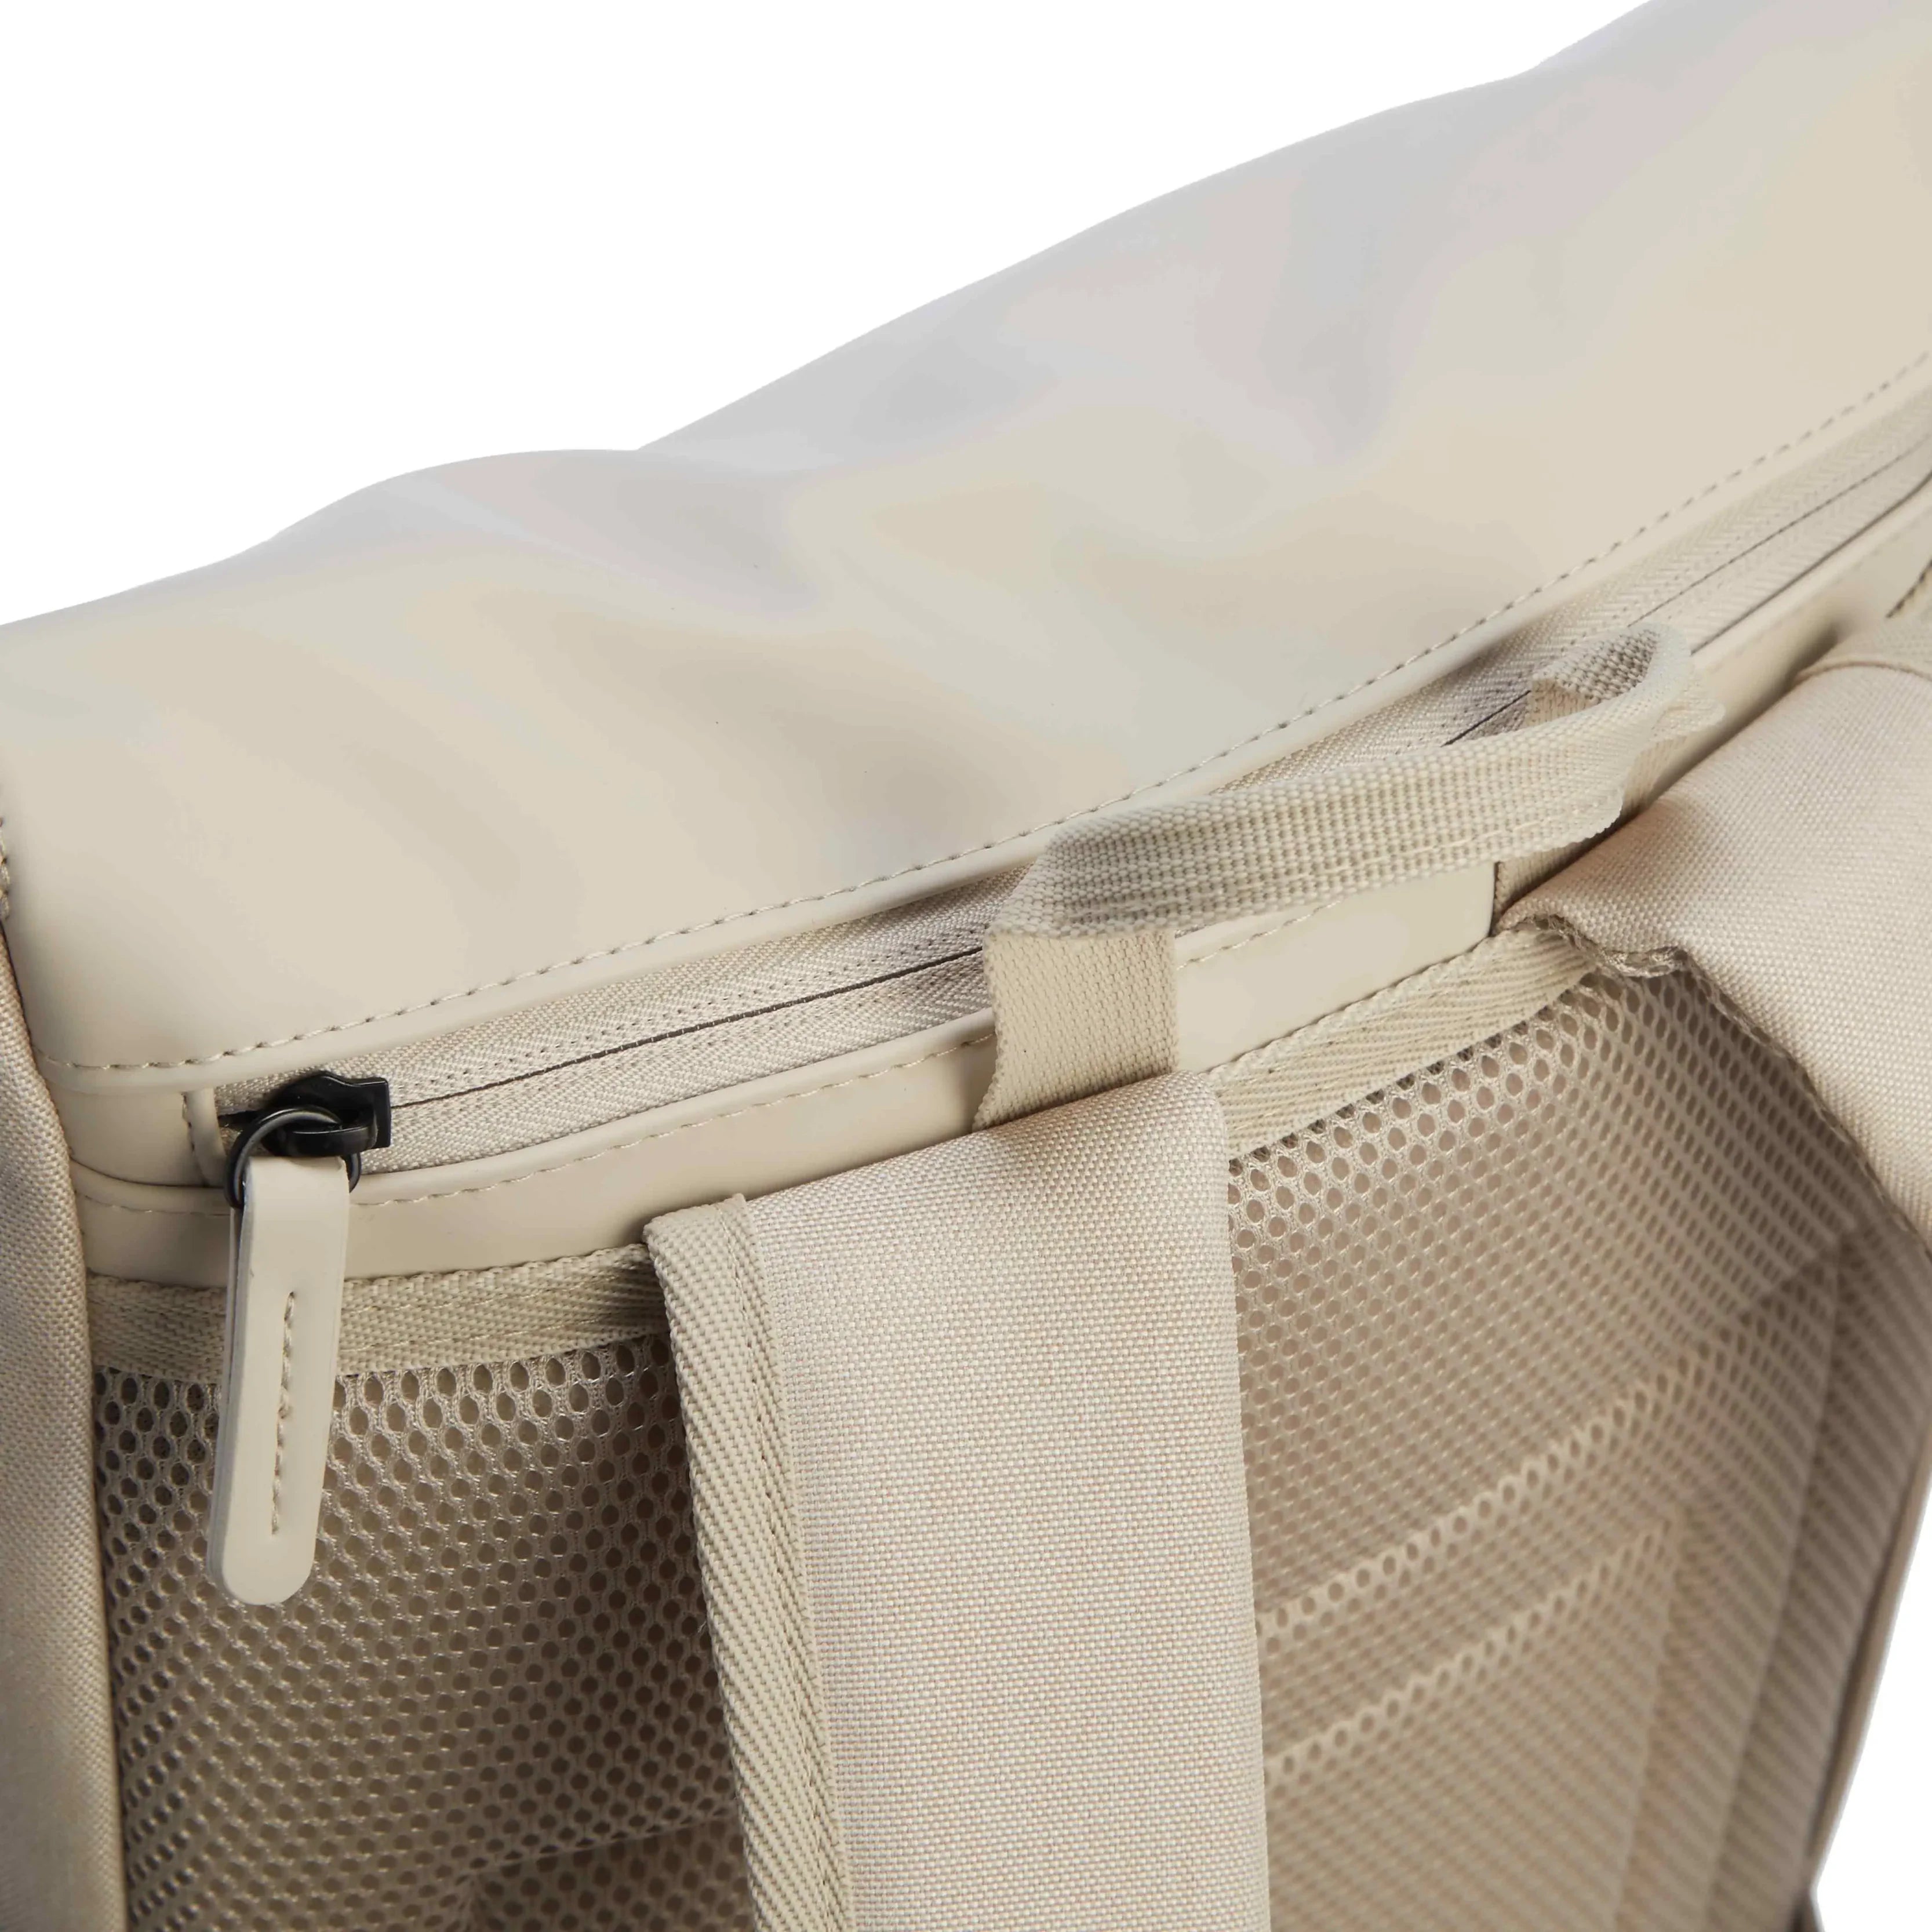 koffer-direkt.de Leisure backpack 42 cm - gray